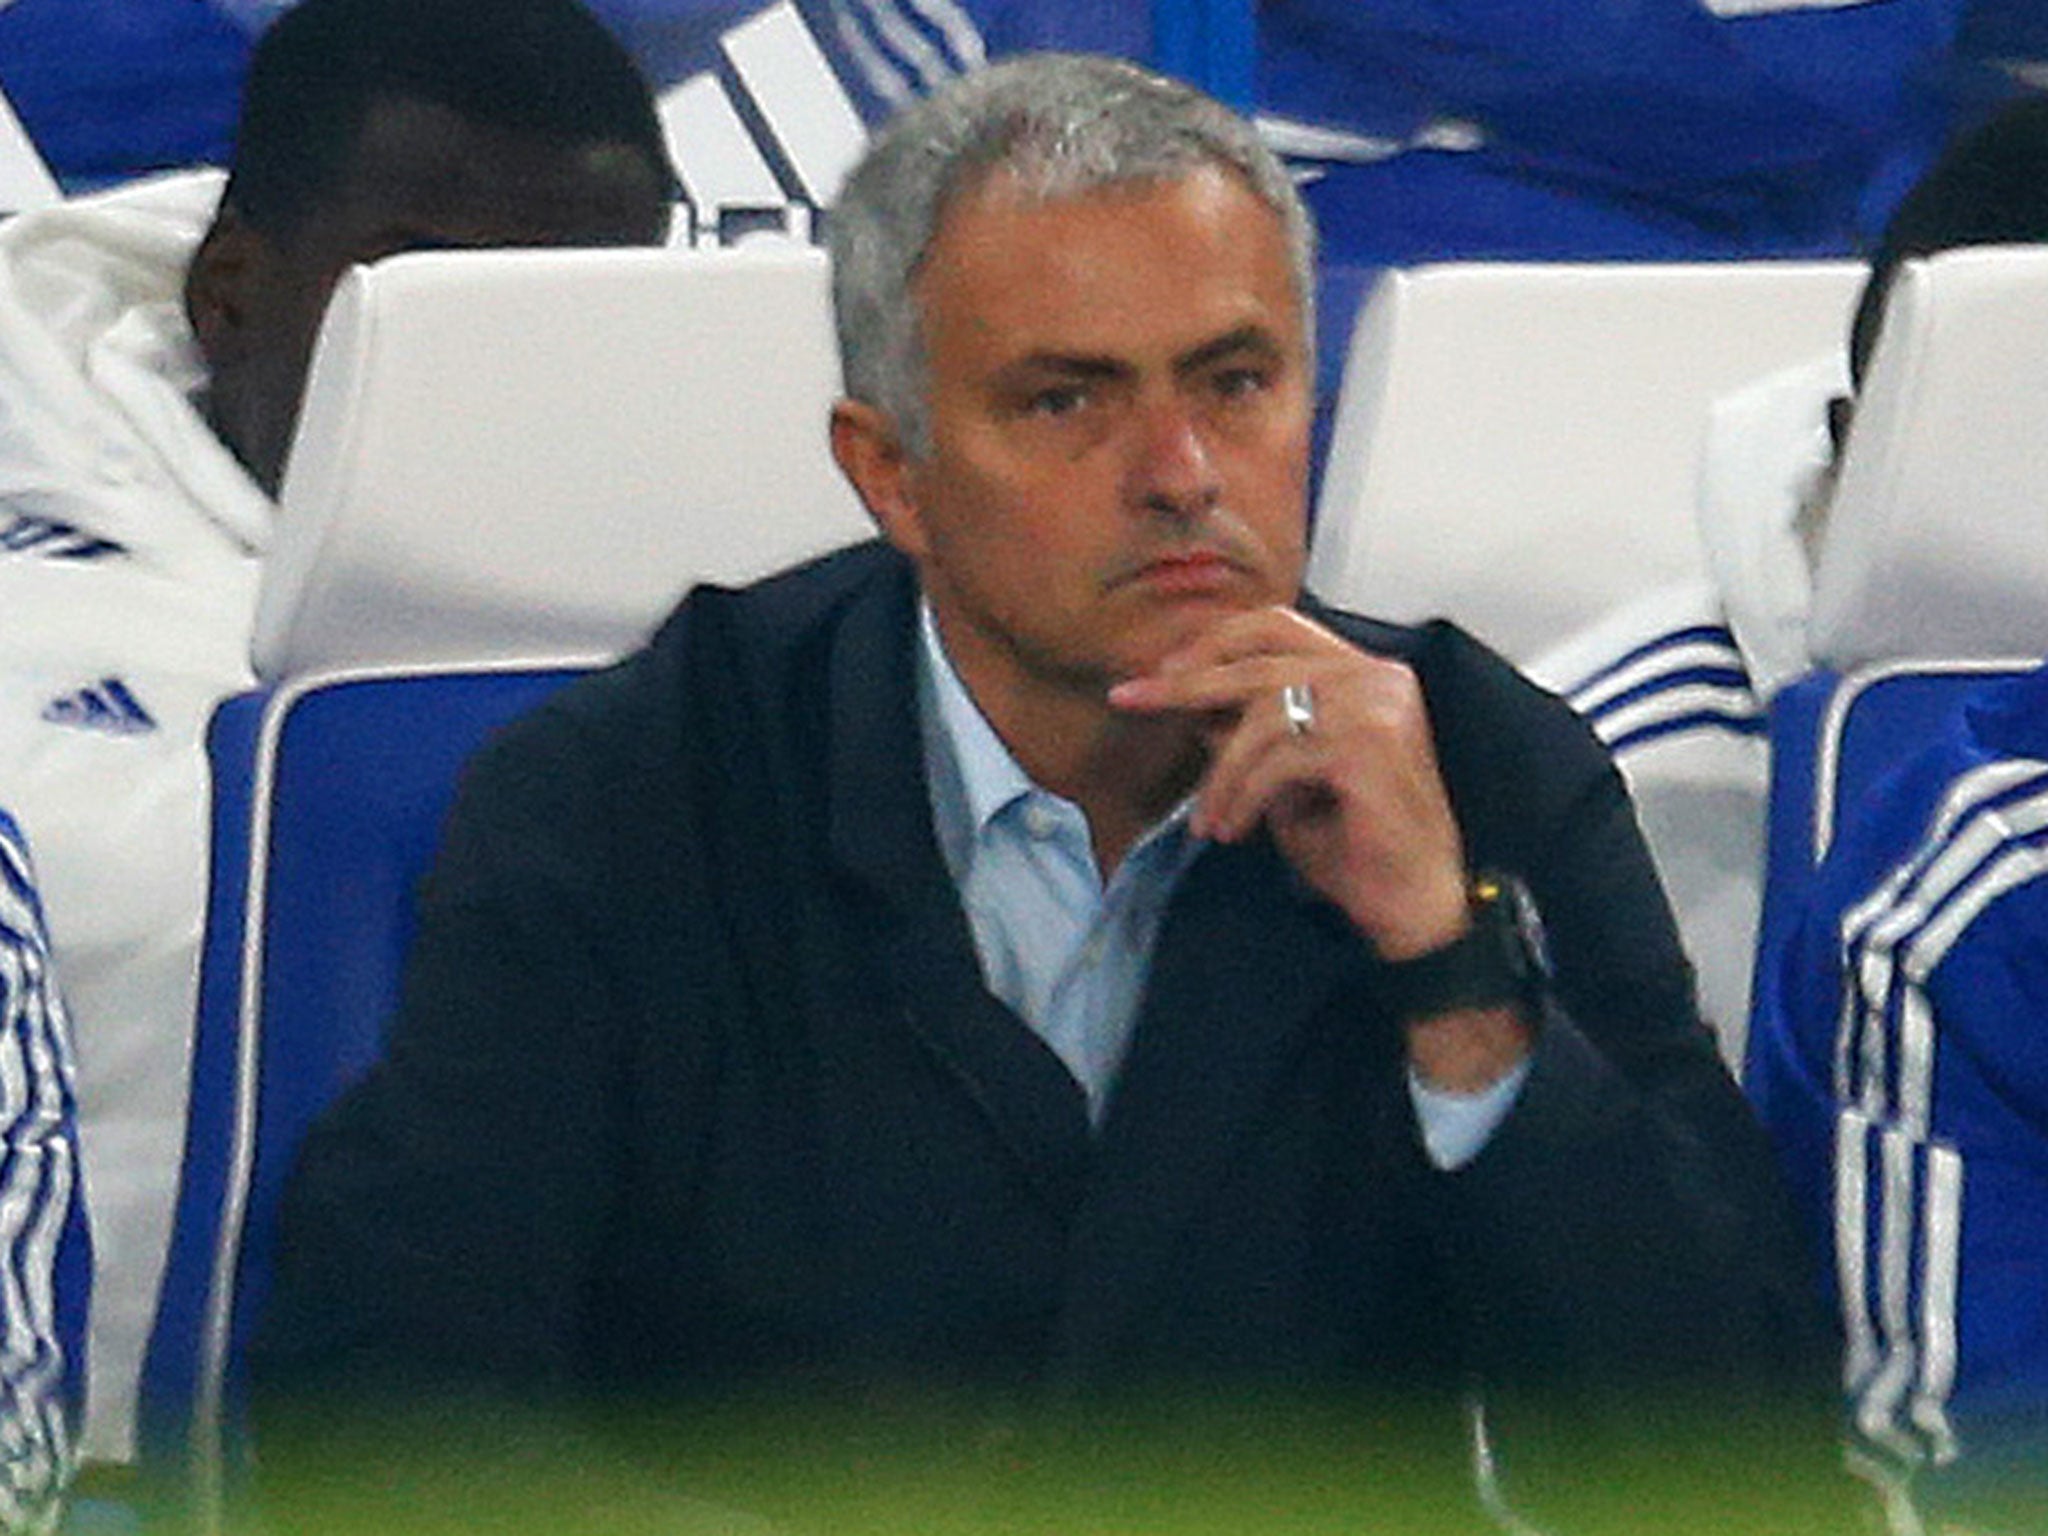 Jose Mourinho's Chelsea face Manchester United on 28 December